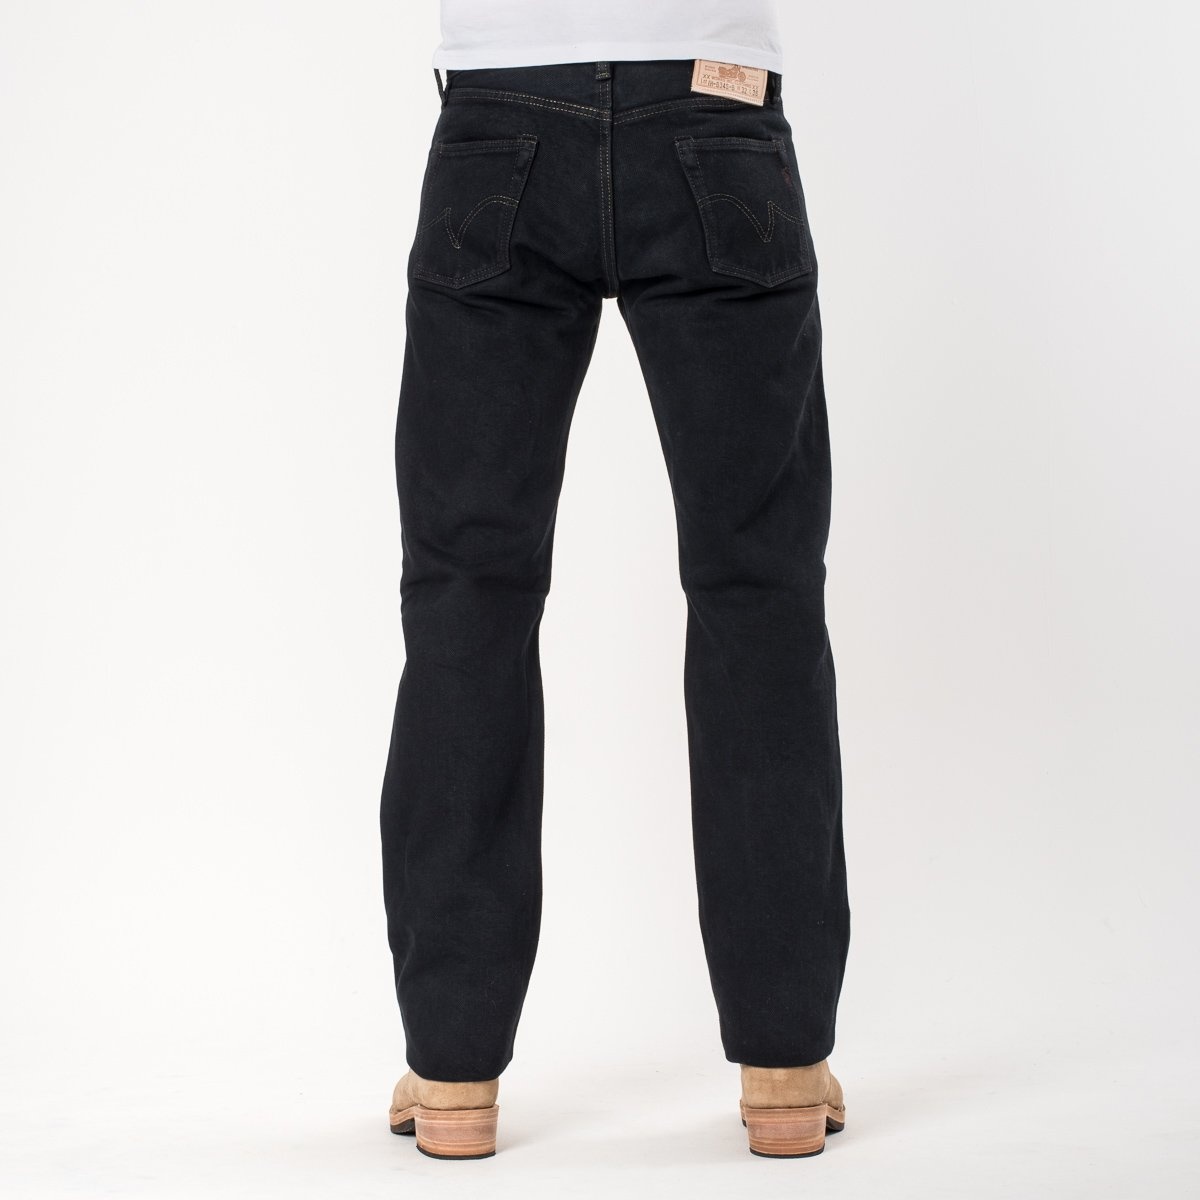 IH-634S-B 21oz Selvedge Denim Straight Cut Jeans - Indigo Overdyed Black - 3